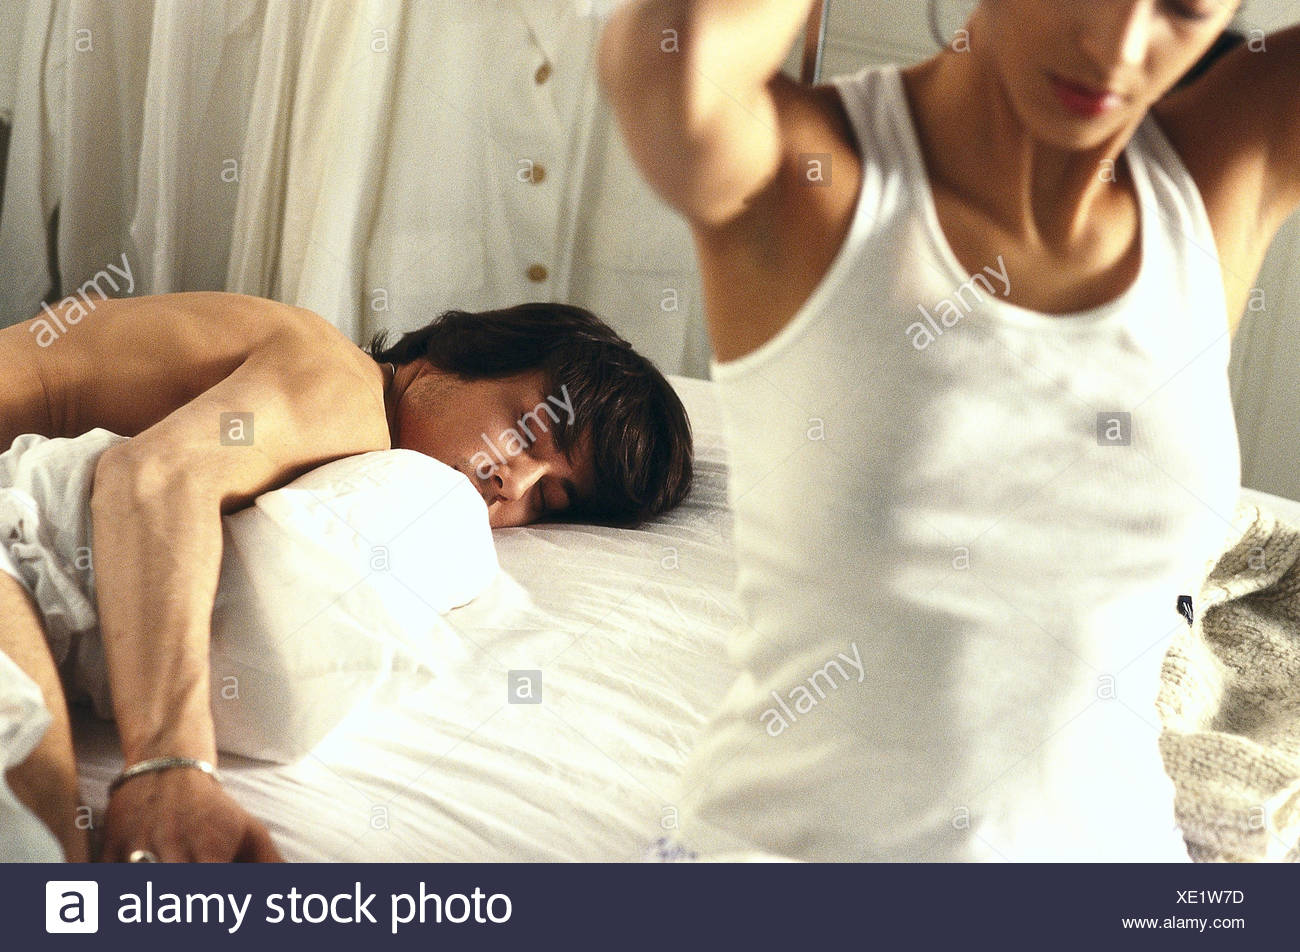 Bed Man Sleep Woman Get Up Model Released Bedroom